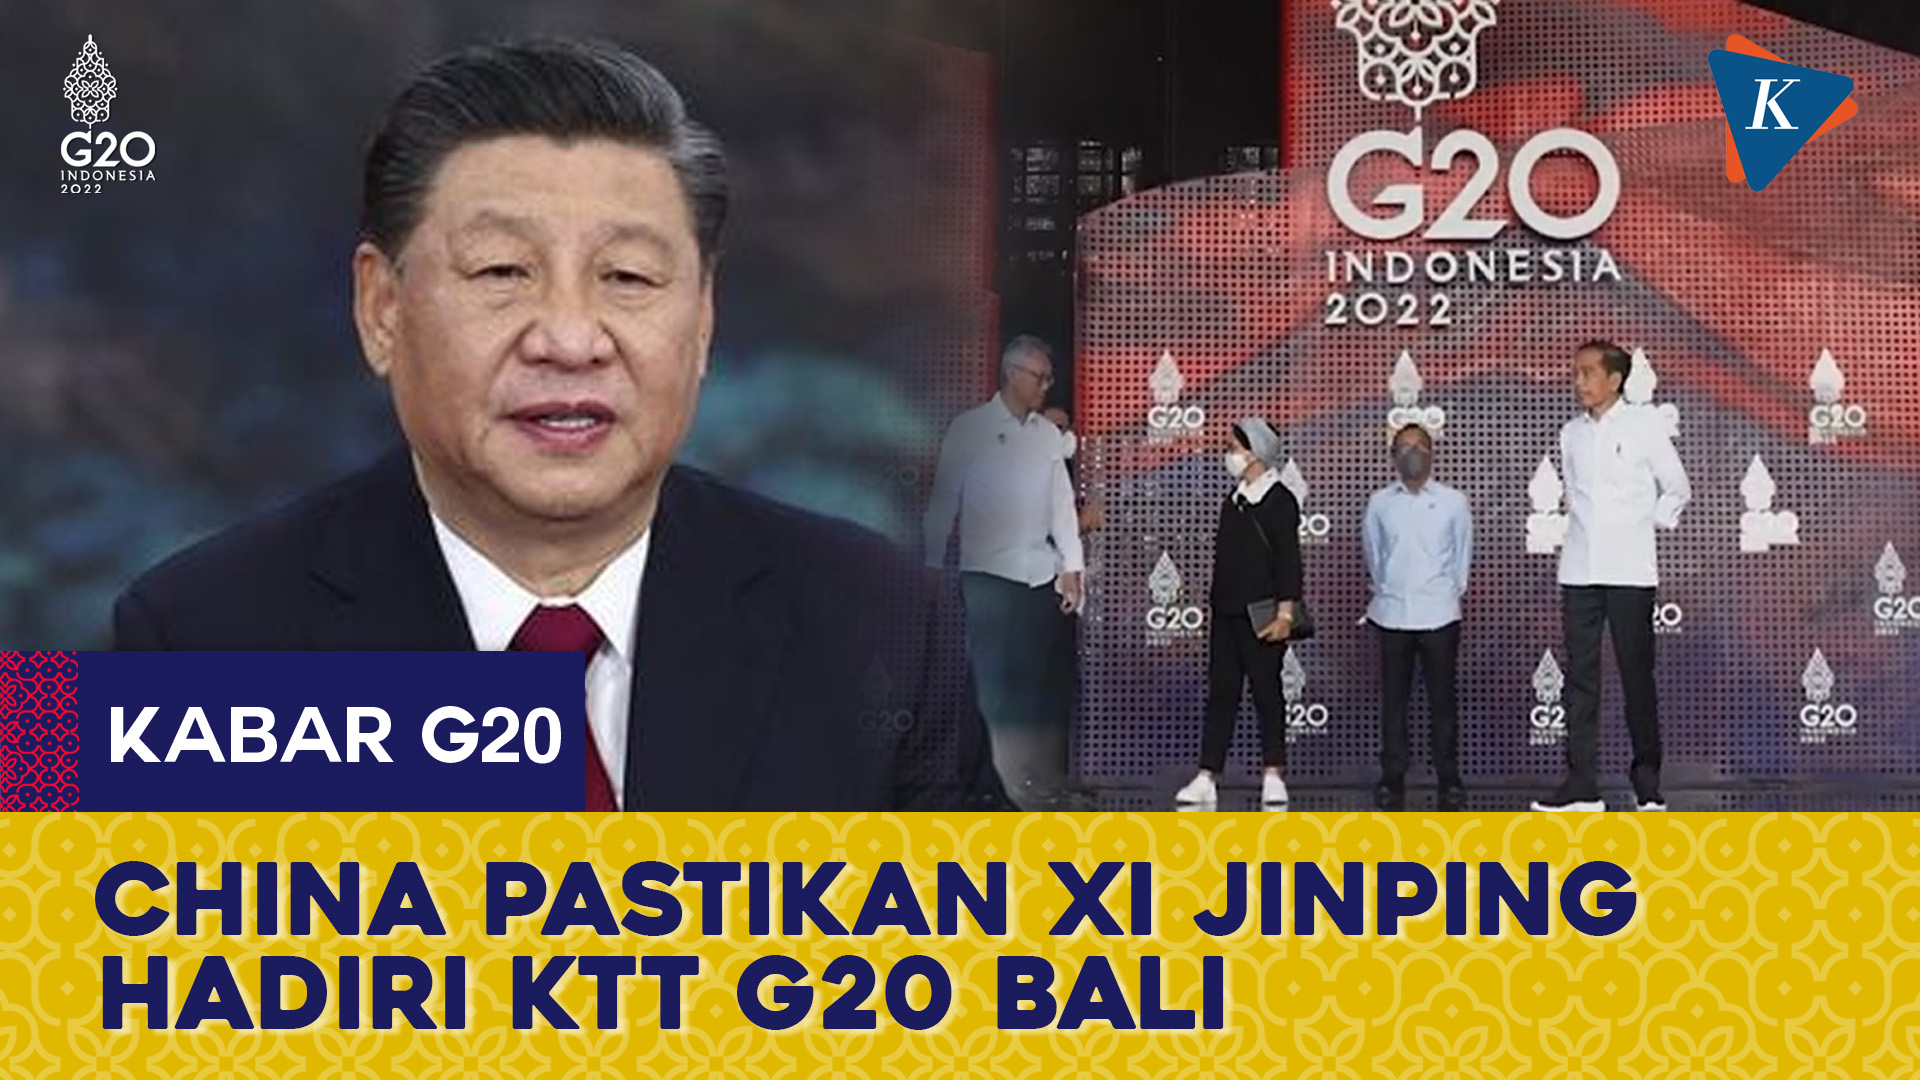 Xi Jinping Hadiri KTT G20 di Bali